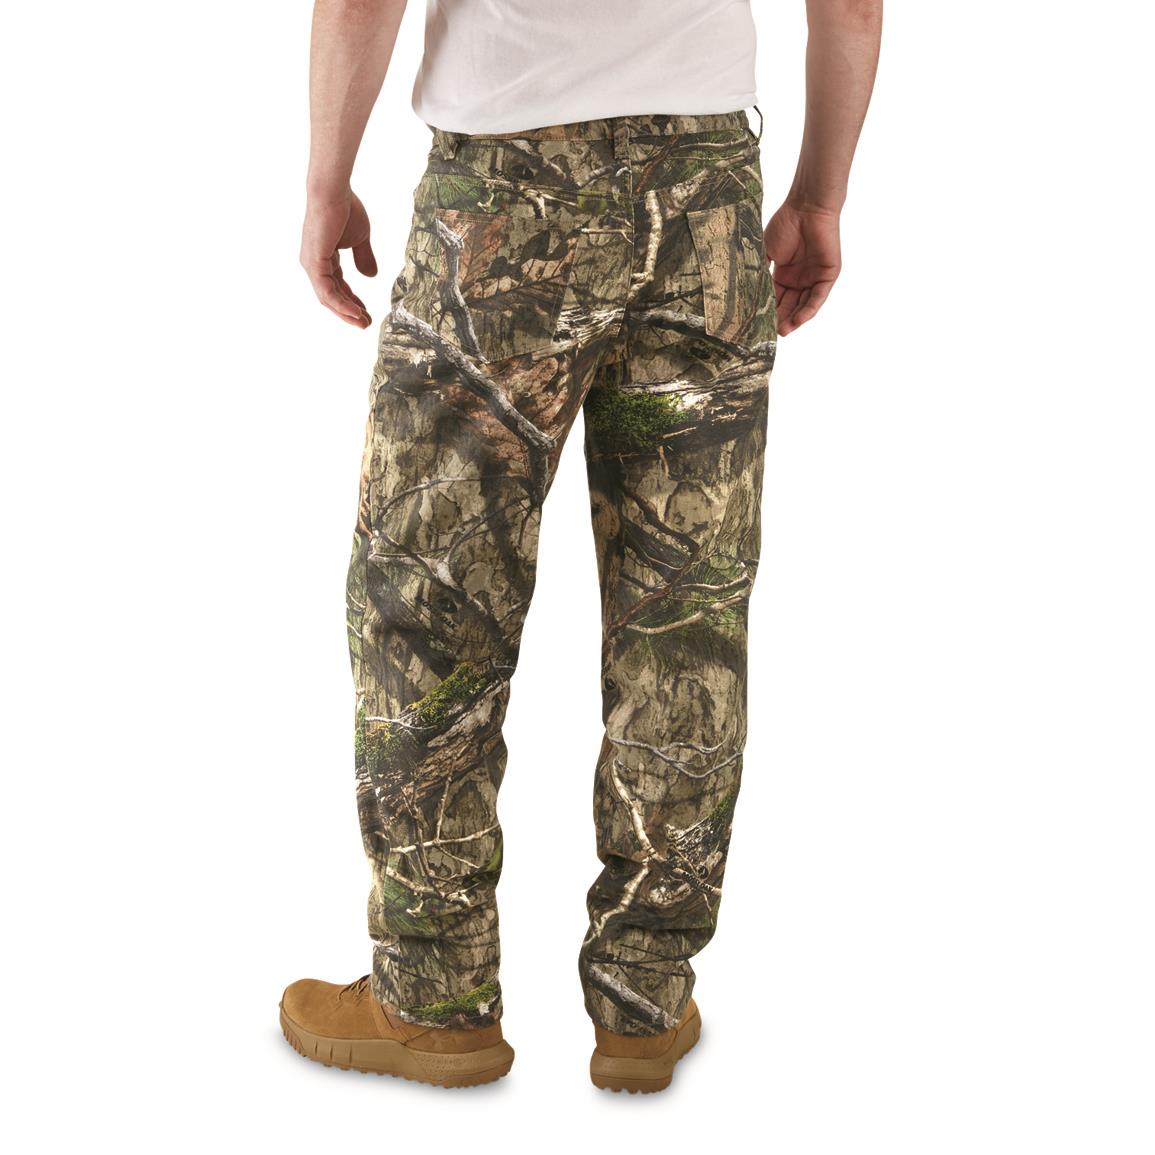 Viktos Wartorn MC Tactical Pants - 728641, Jeans & Pants at Sportsman's ...